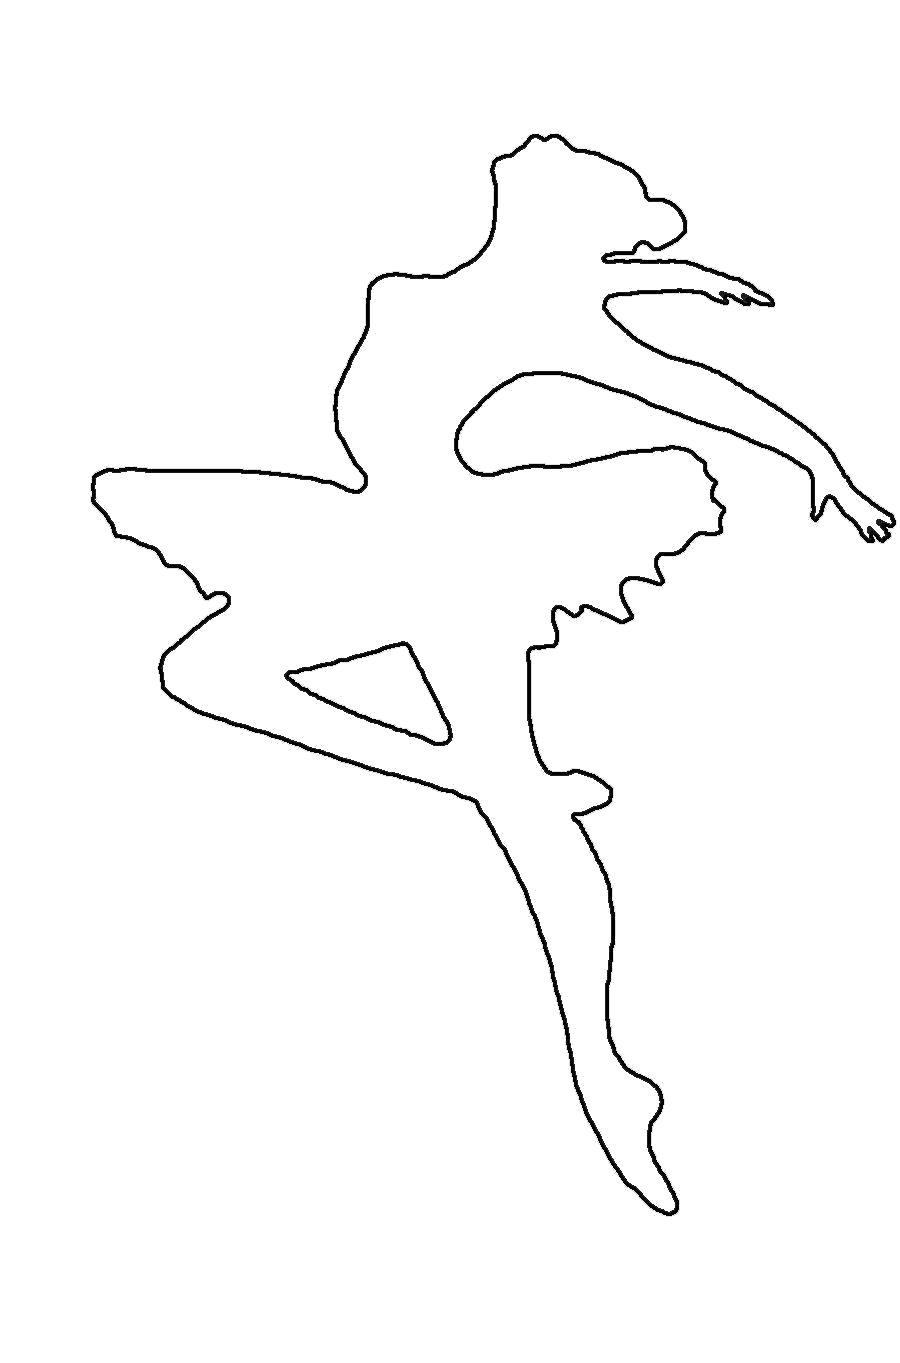 Раскраска Раскраски шаблоны балерин балерина шаблон для вырезки из бумаги, для детского творчества. Шаблон